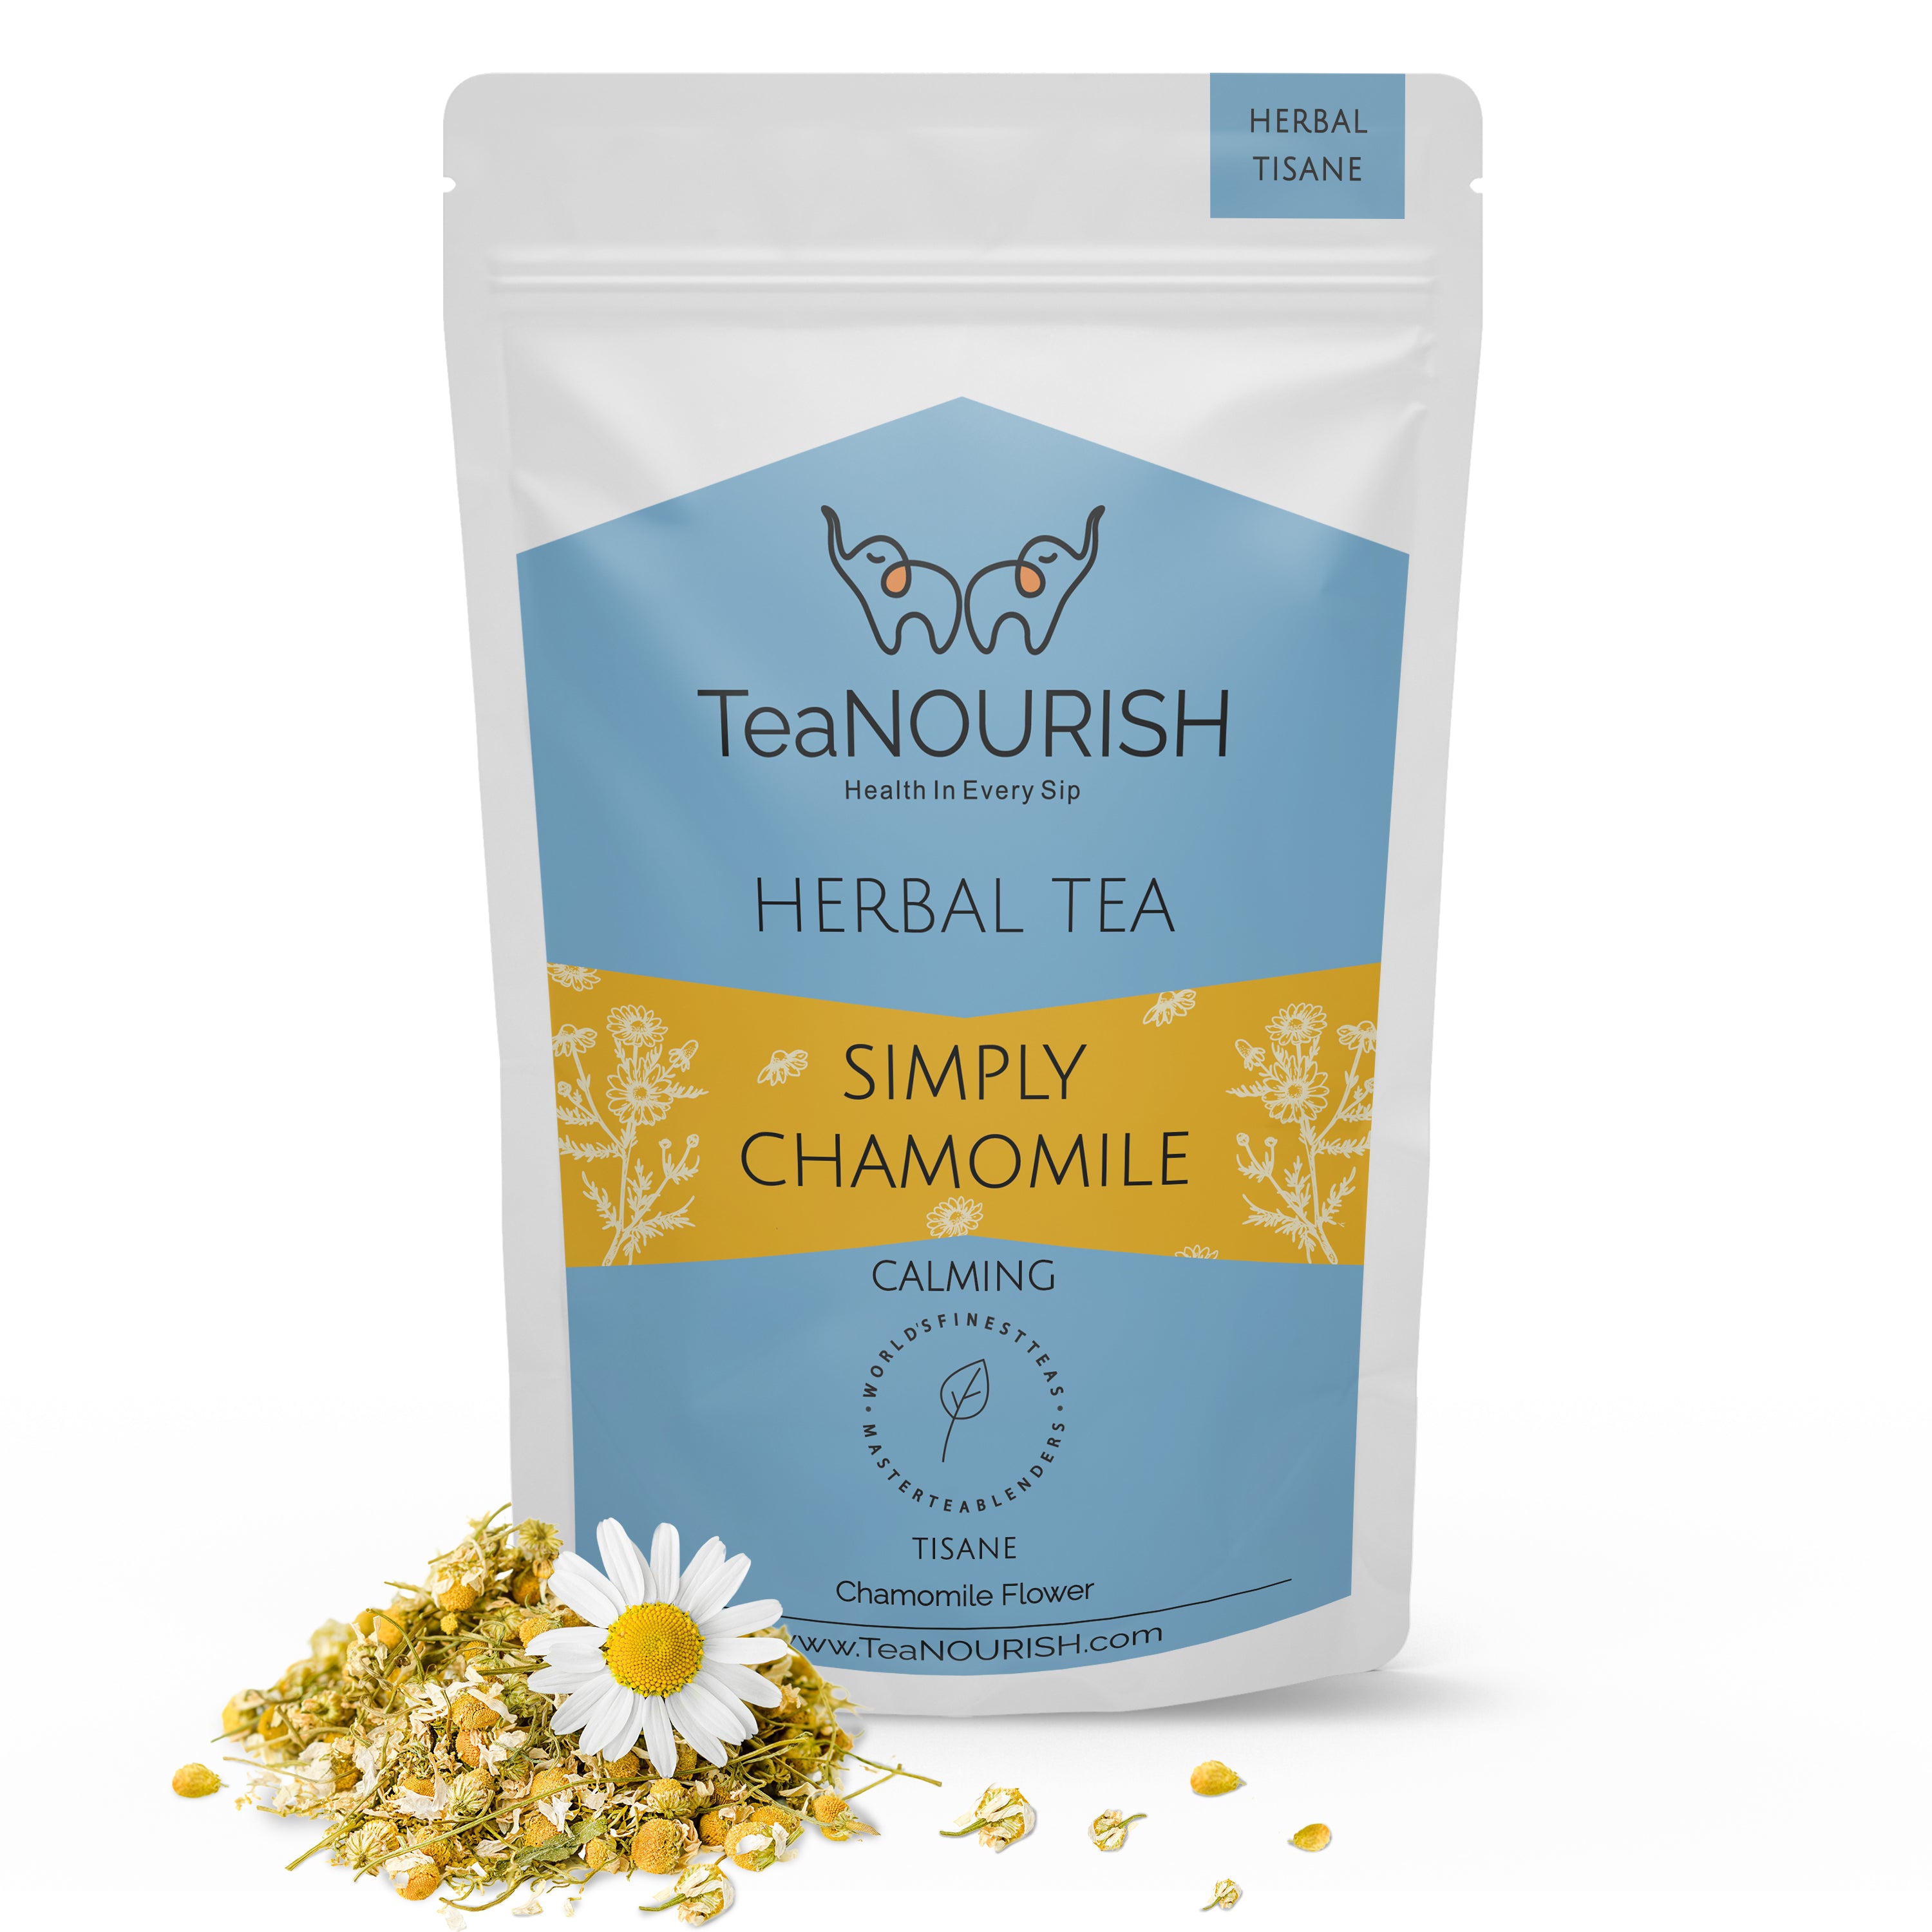 Simply Chamomile Herbal Tea